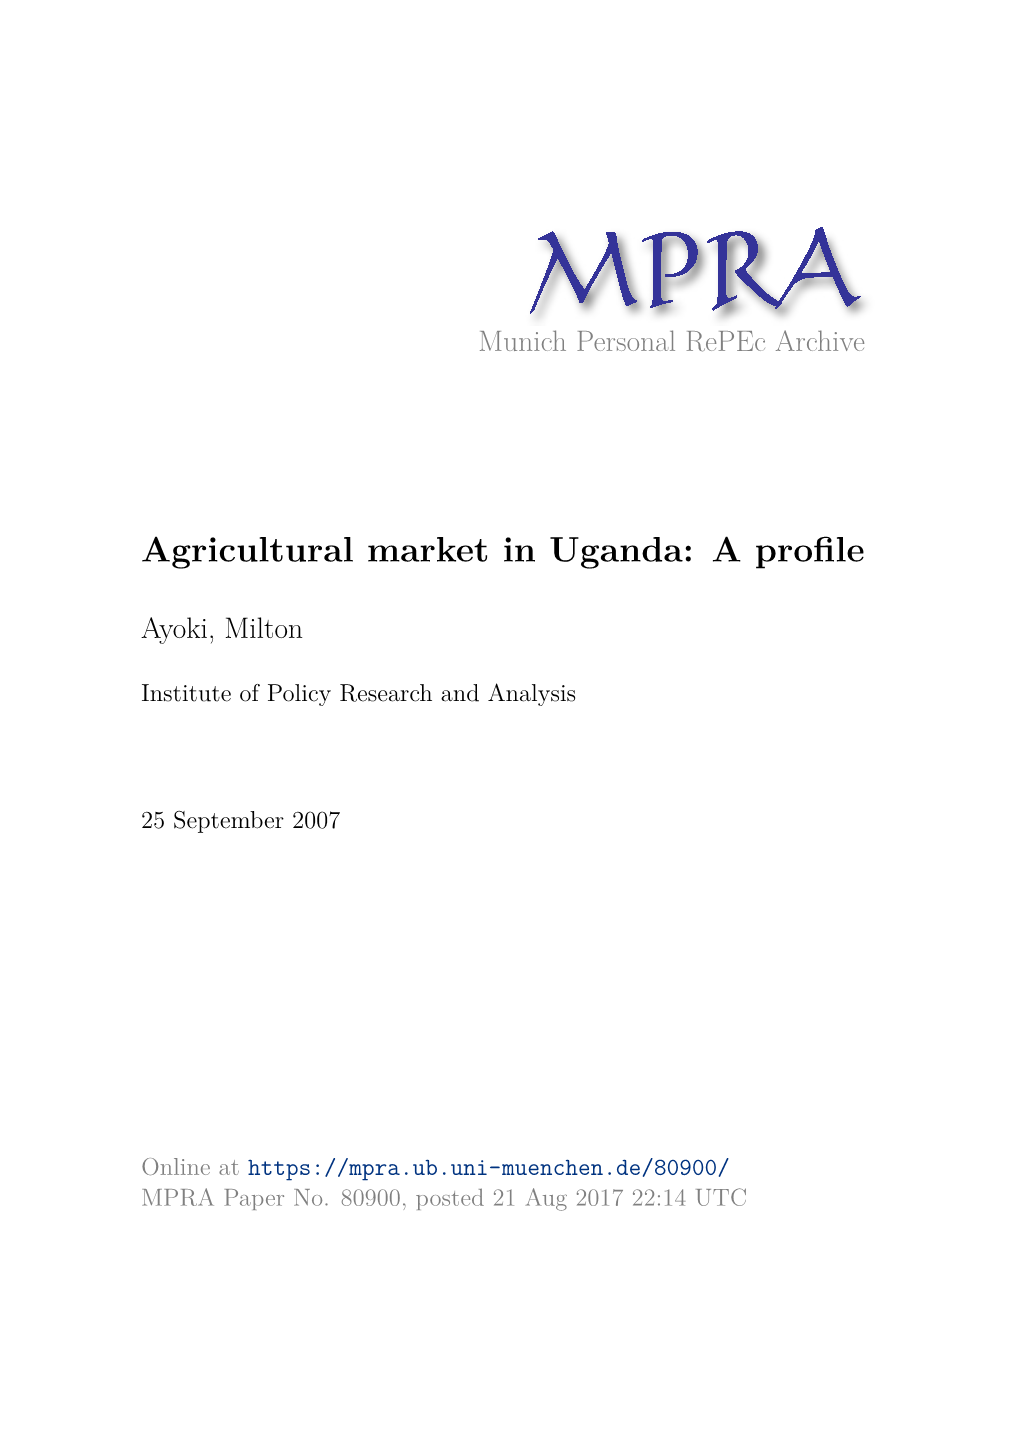 Agricultural Market in Uganda: a Proﬁle